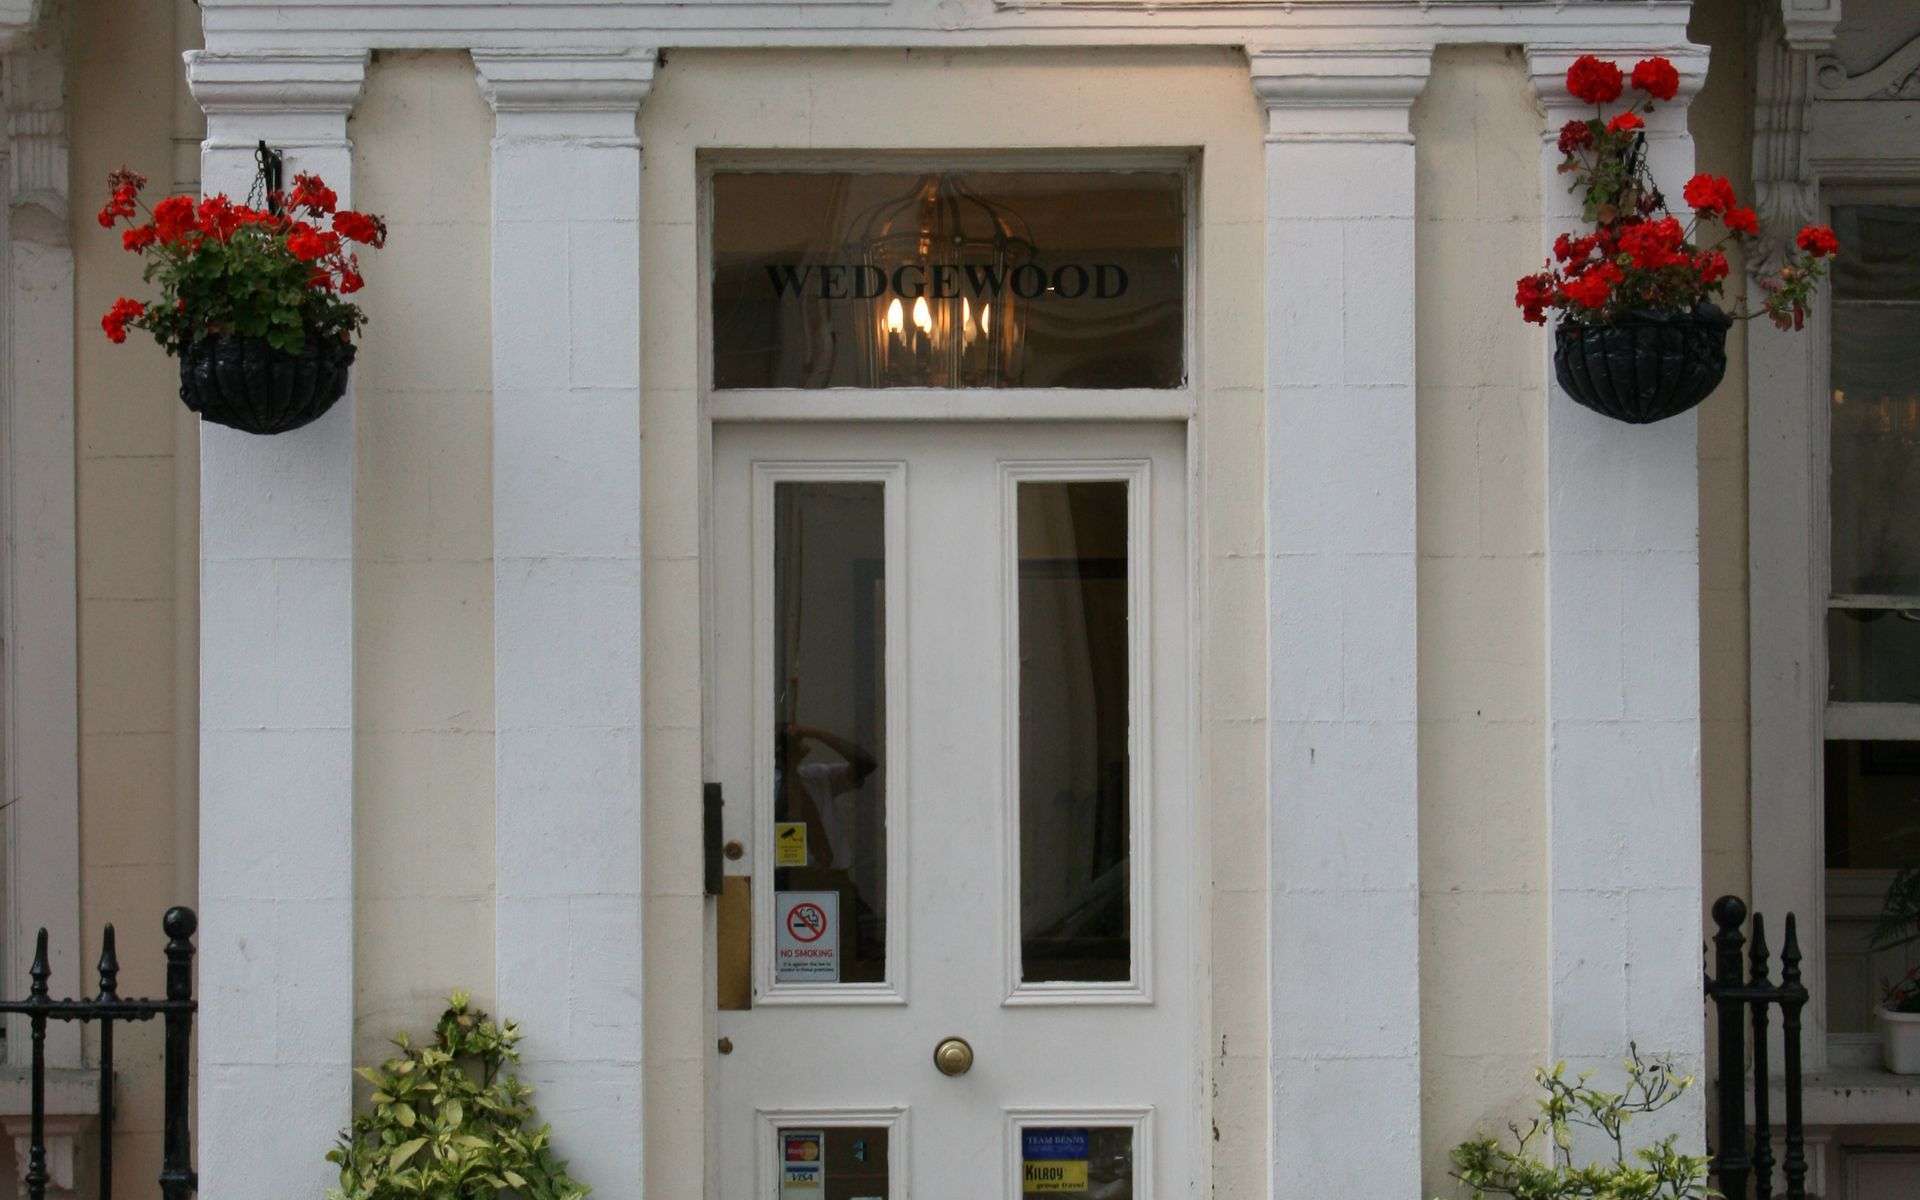 Wedgewood Hotel Londres Exterior foto